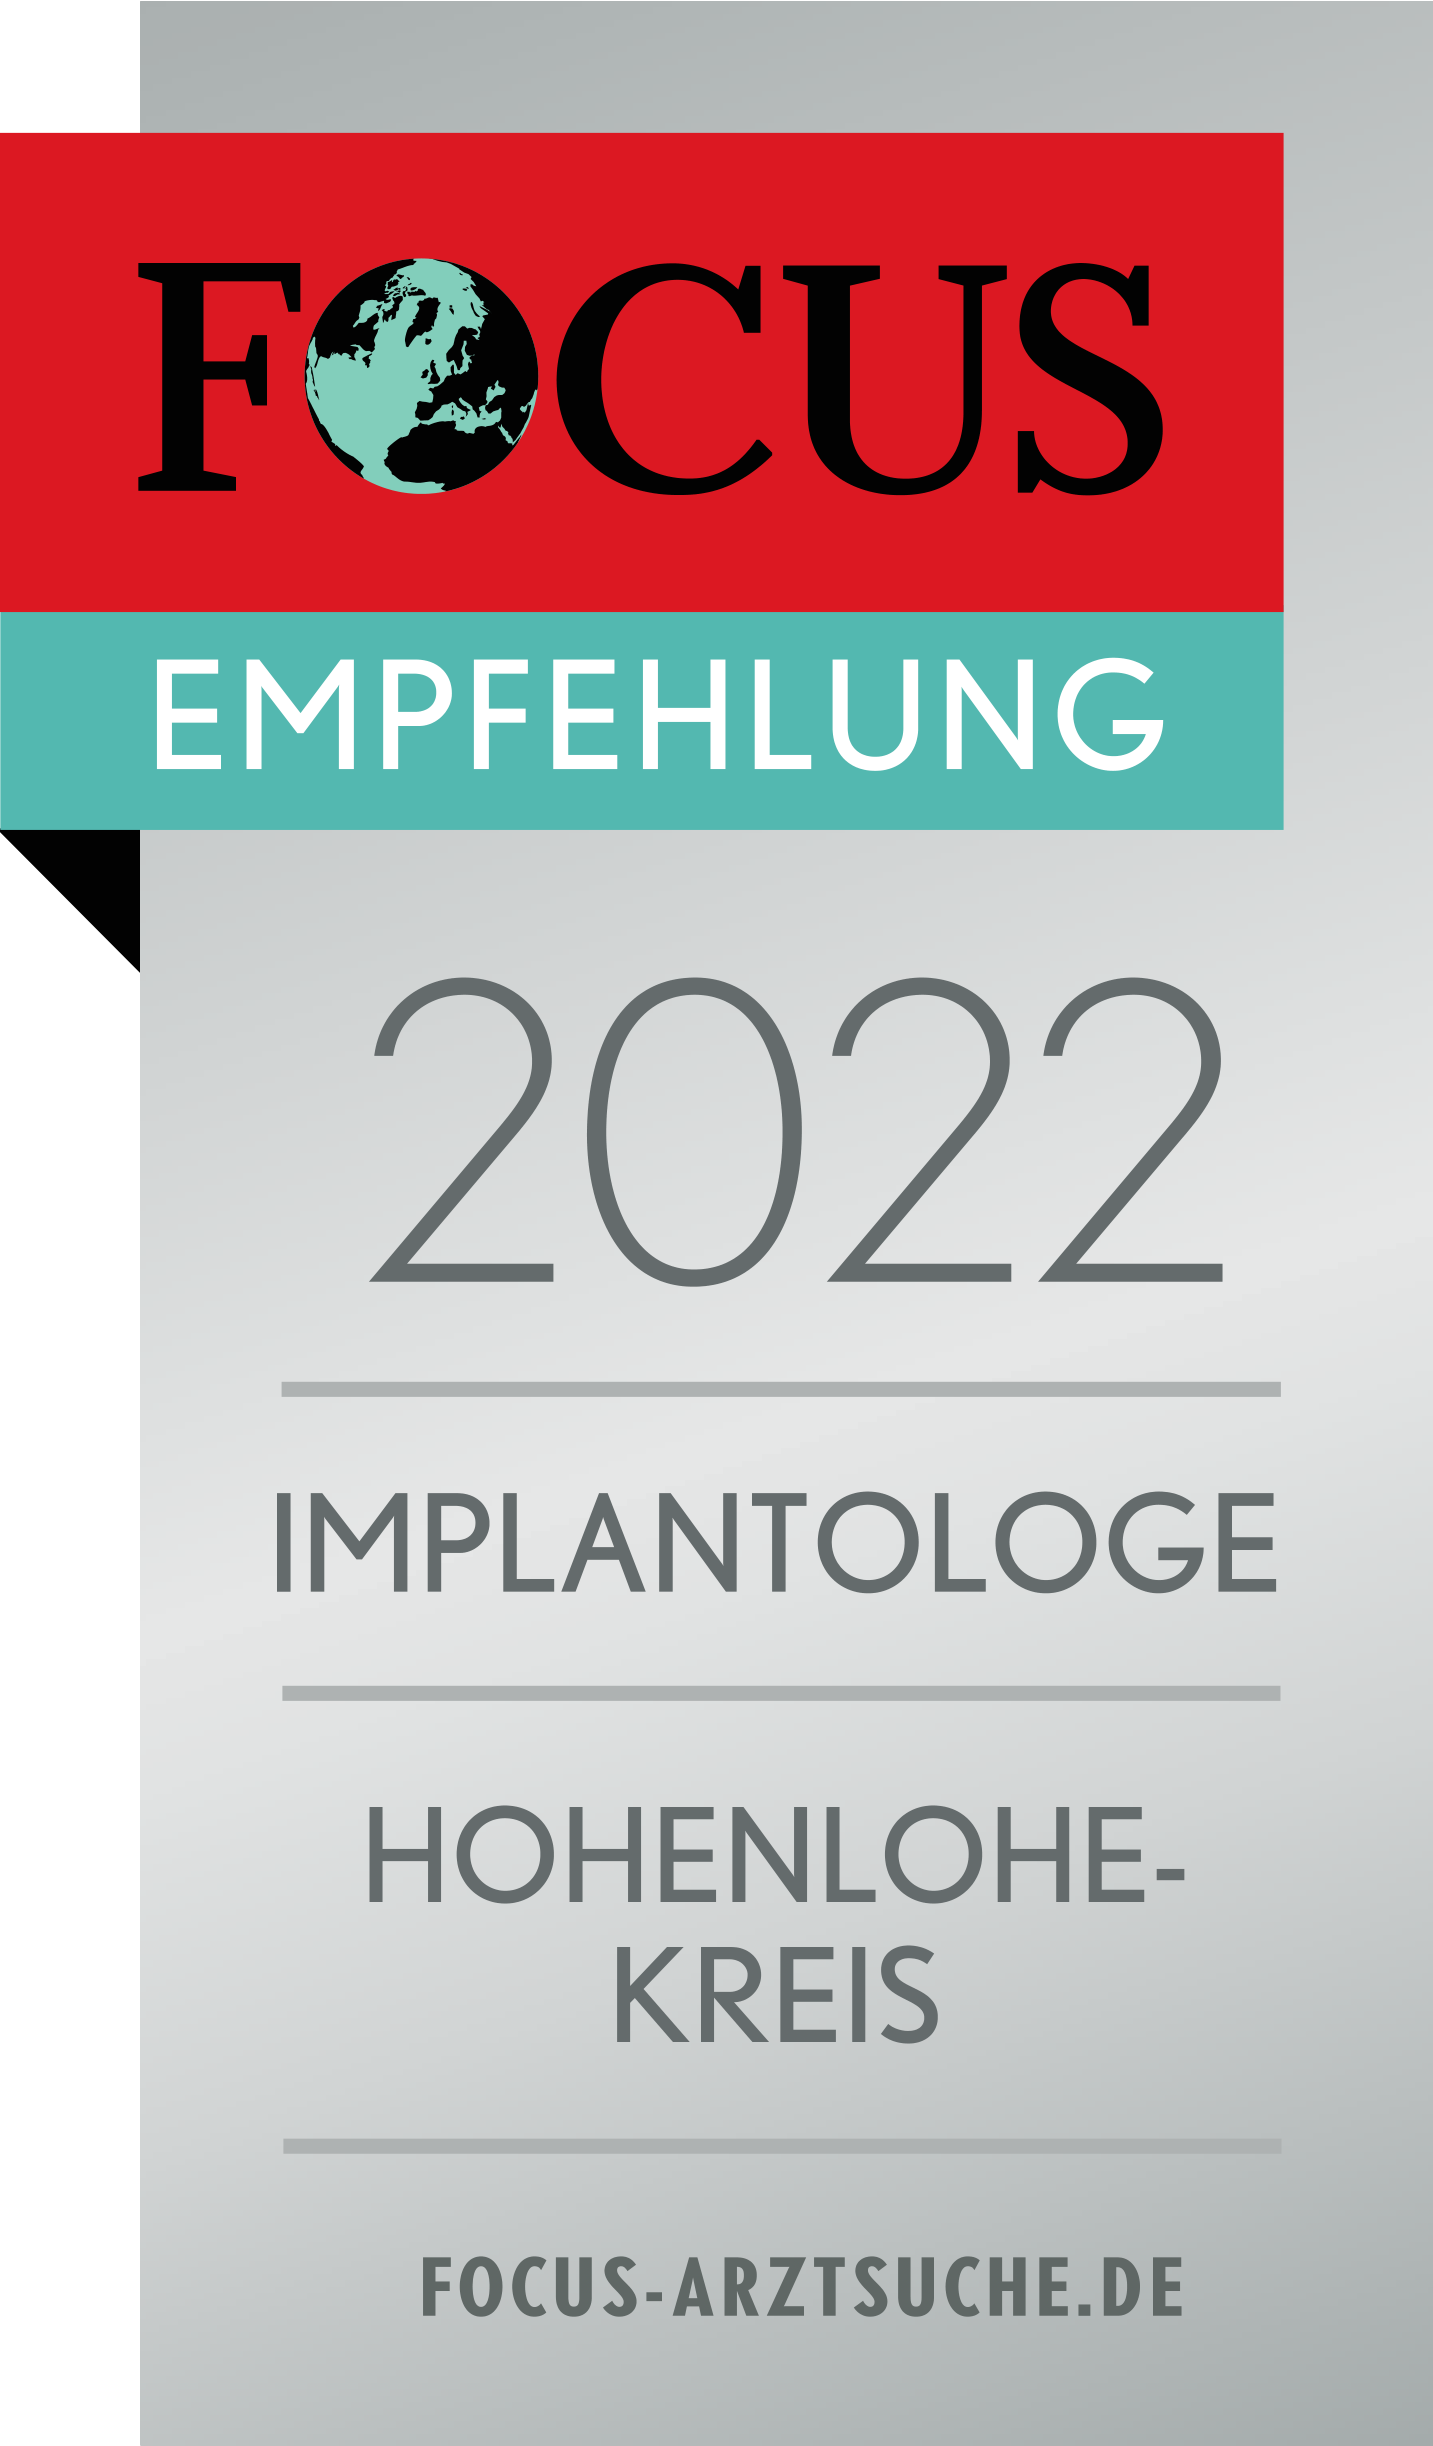 Focus Siegel 2022 Implantologie